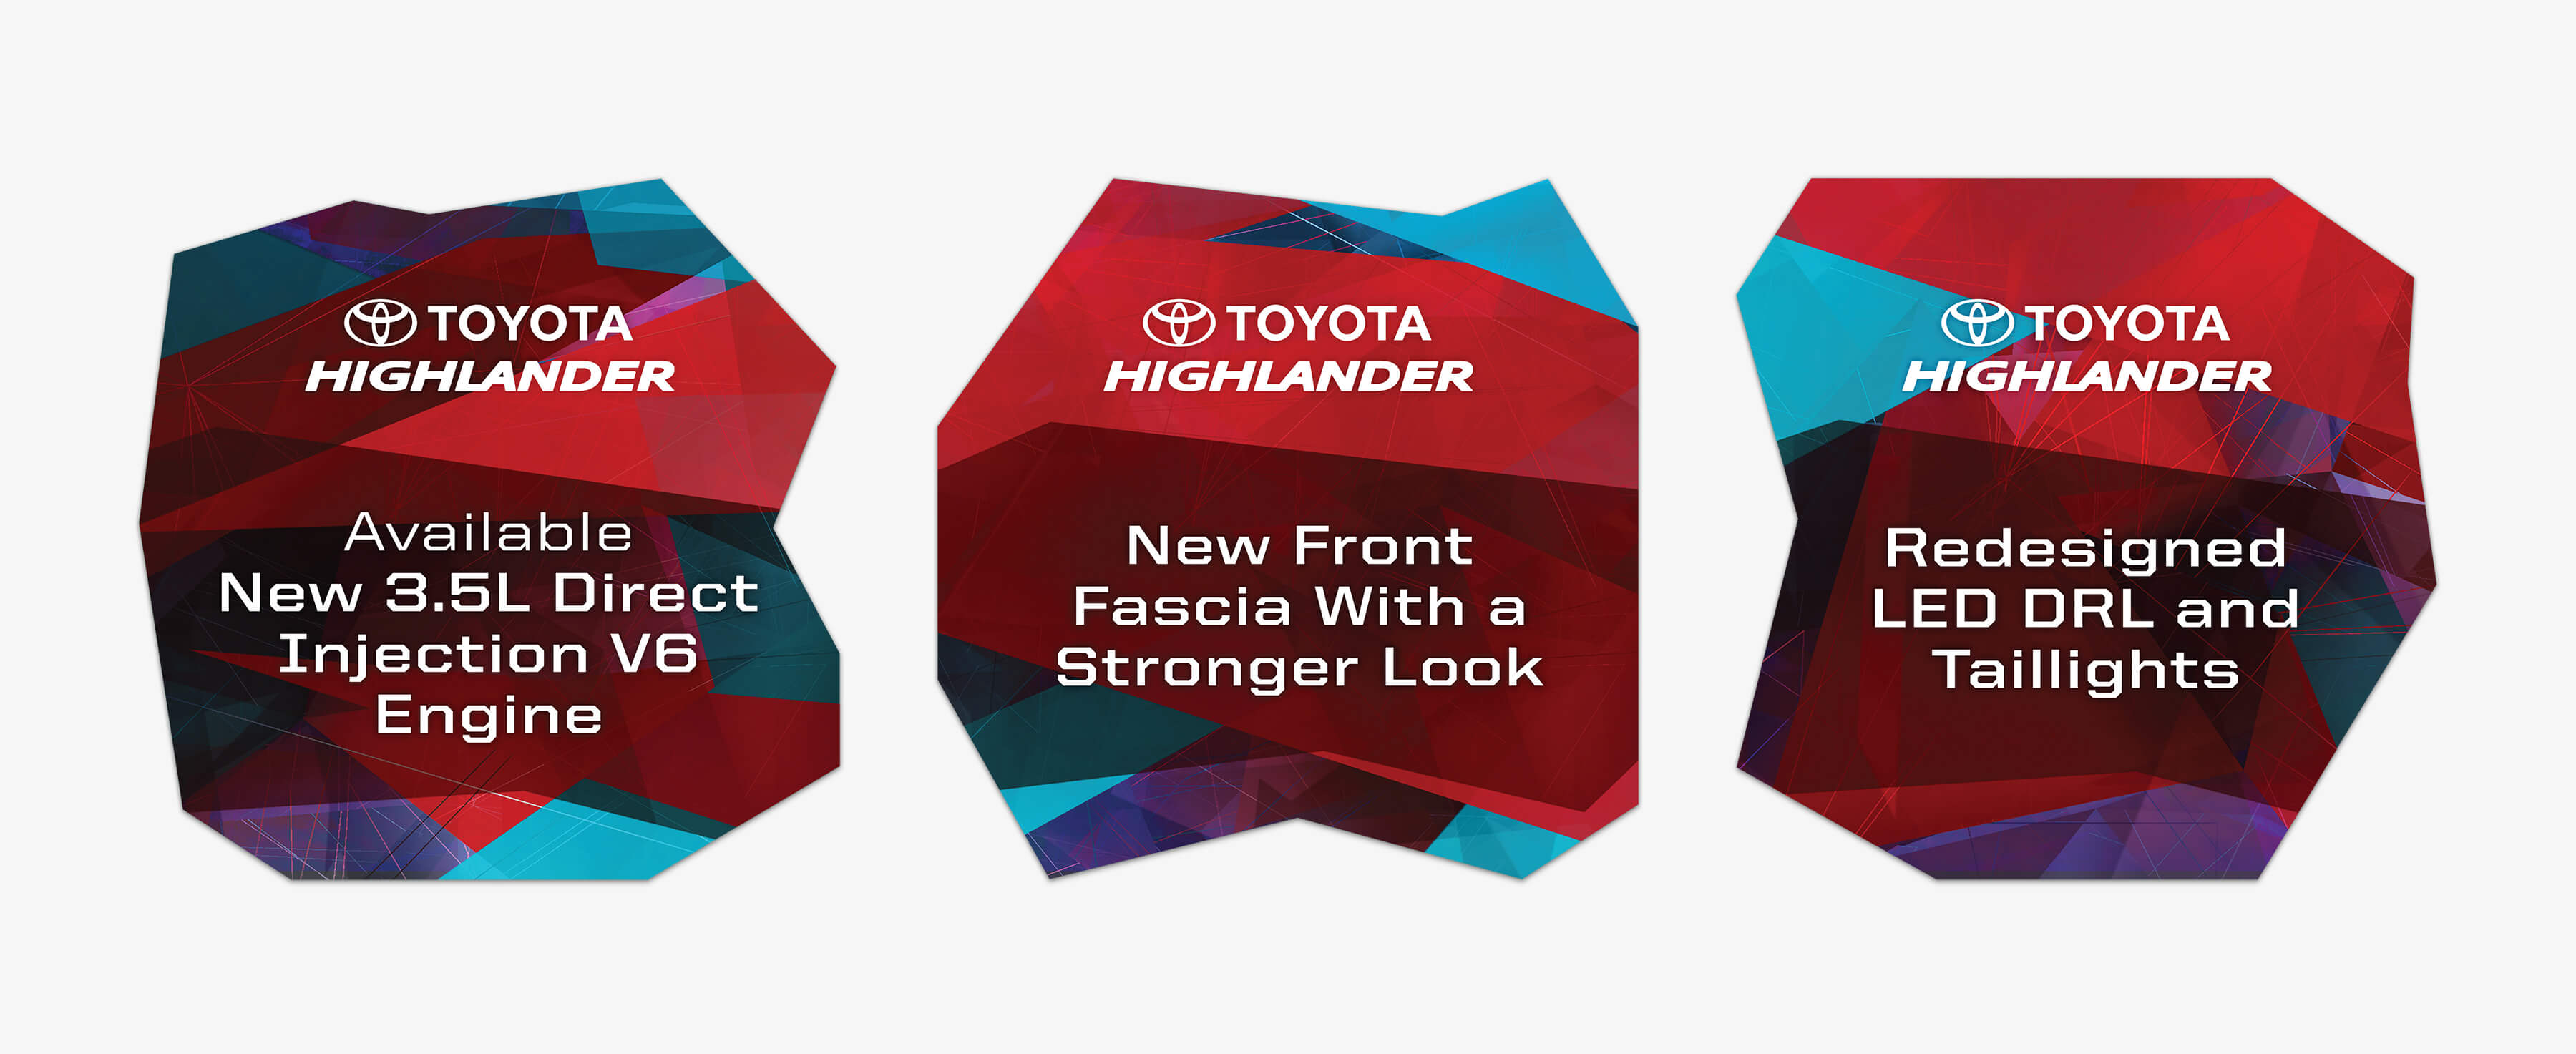 Toyota Rock Your Run. Toyota Highlander Challenge Pop Off closeups.